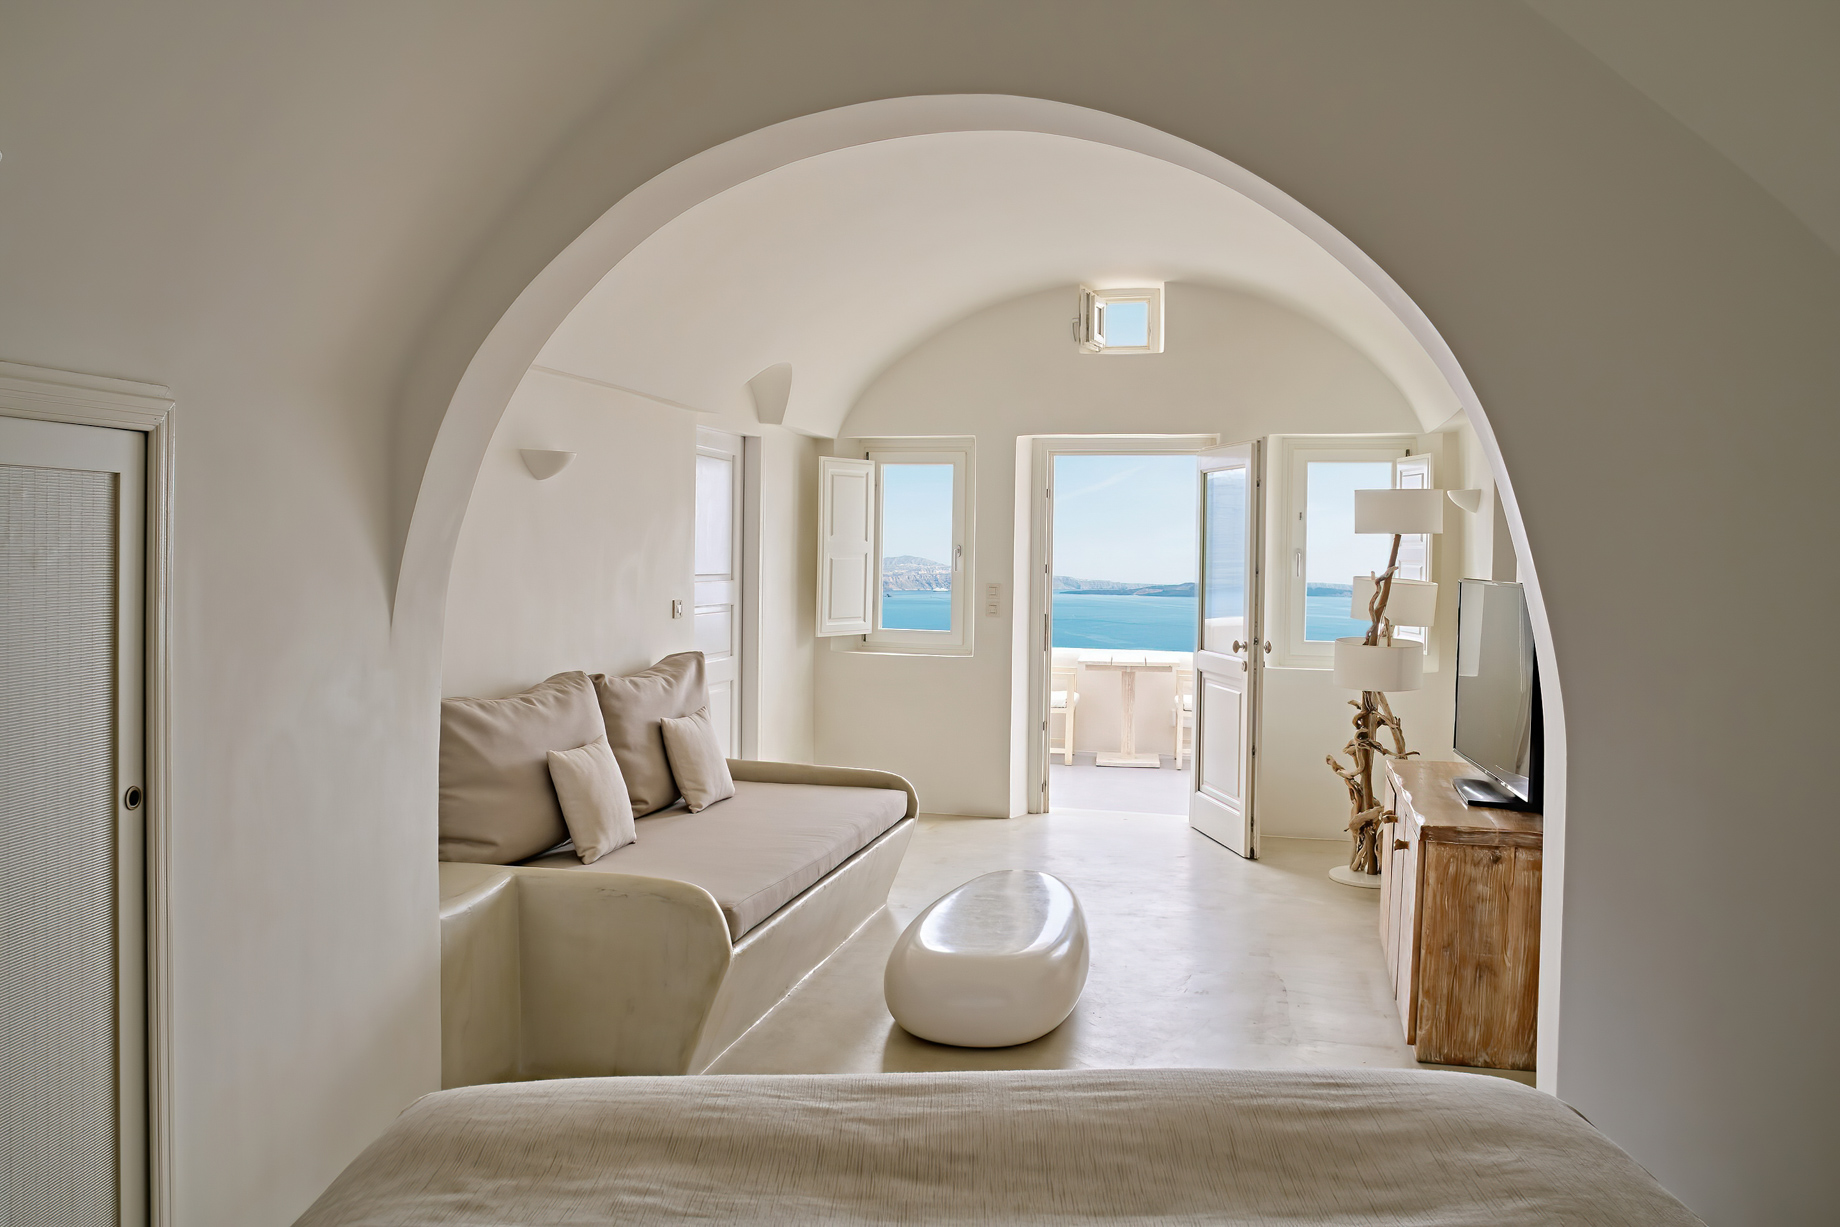 Mystique Hotel Santorini – Oia, Santorini Island, Greece – All2Senses Suite